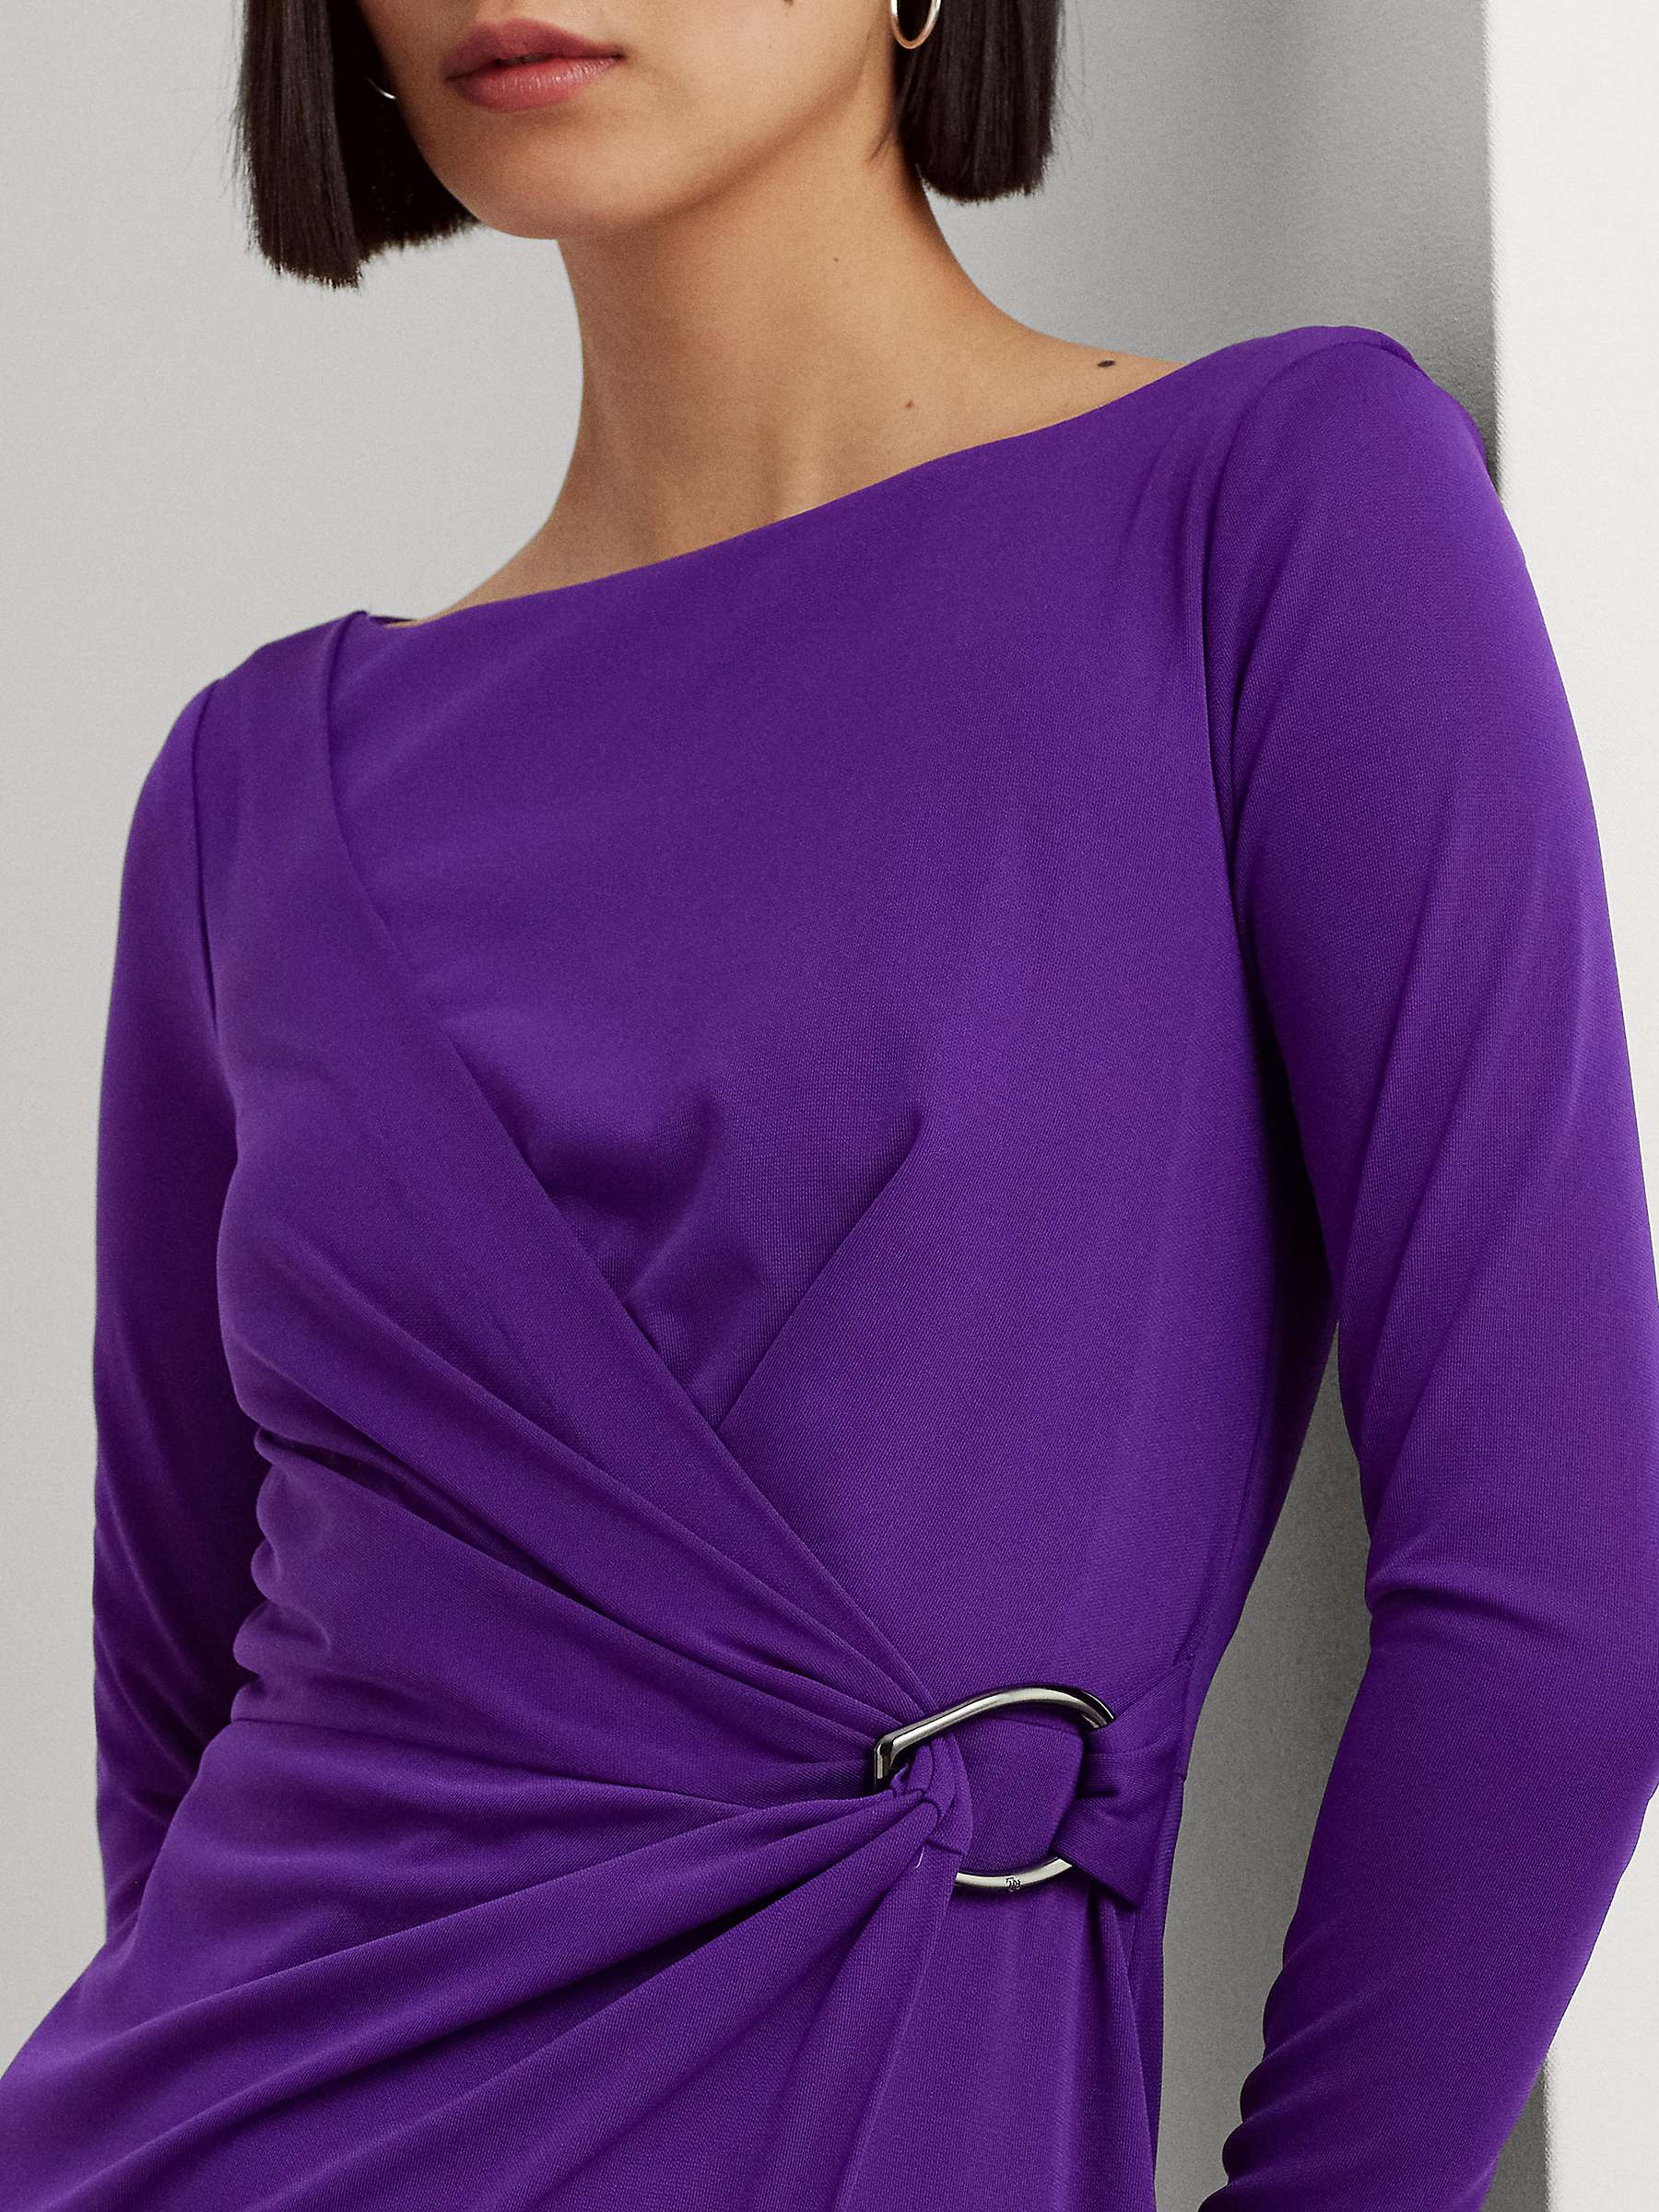 Ralph Lauren Lauren Ralph Lauren Jacinta Dress, Purple Agate at John ...